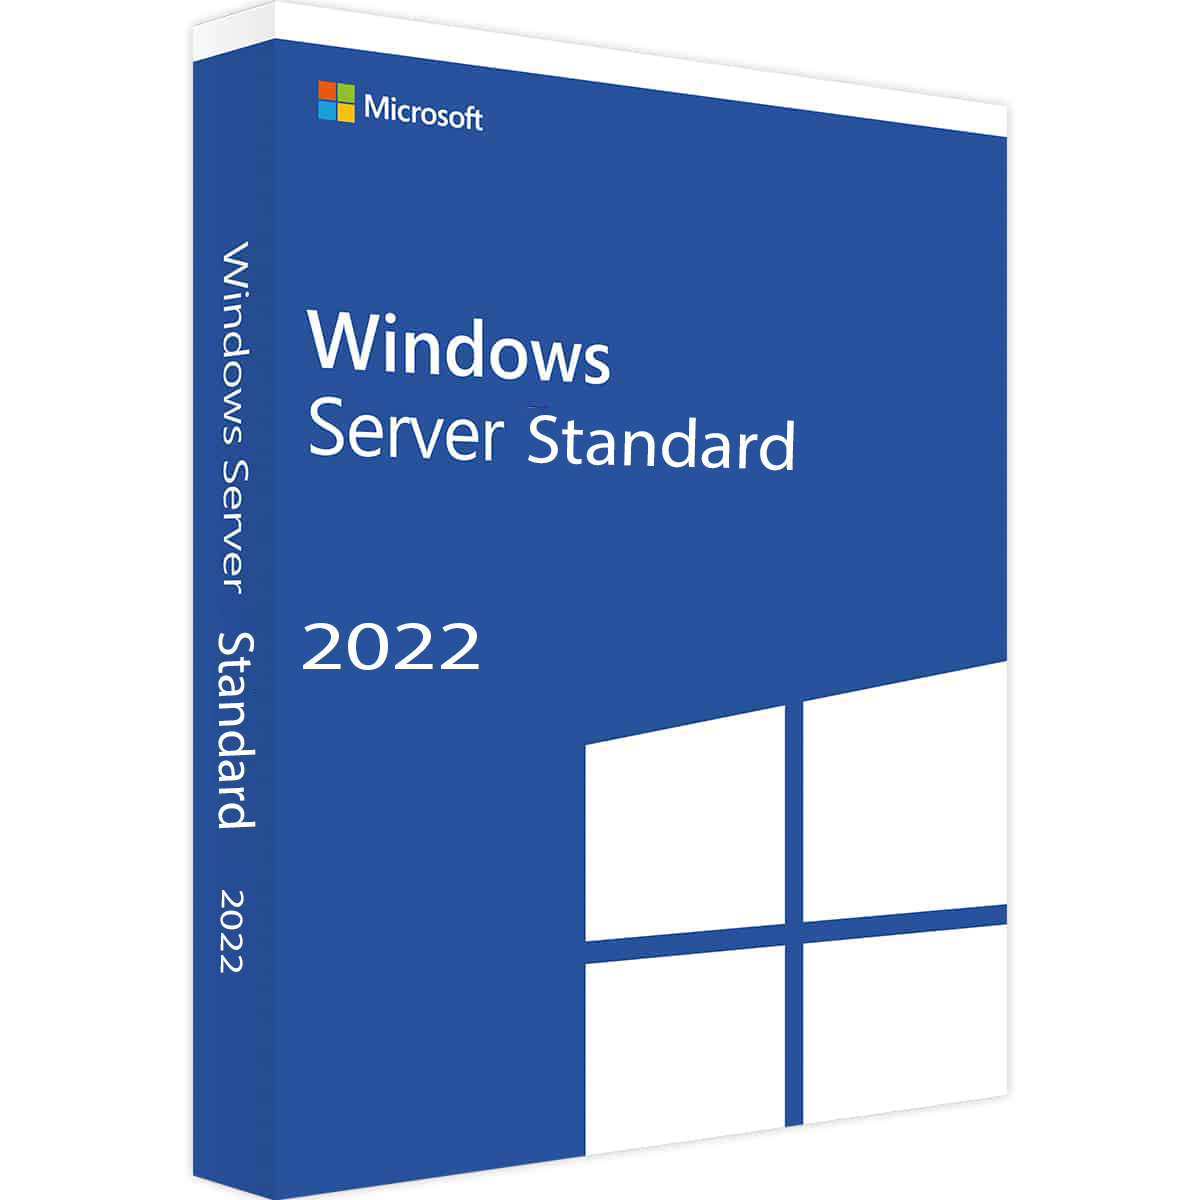 Microsoft Windows Server Standard 2022 64bit English 1pk Dsp Oei Dvd 16 Cores Thegioimaychuvn 8852